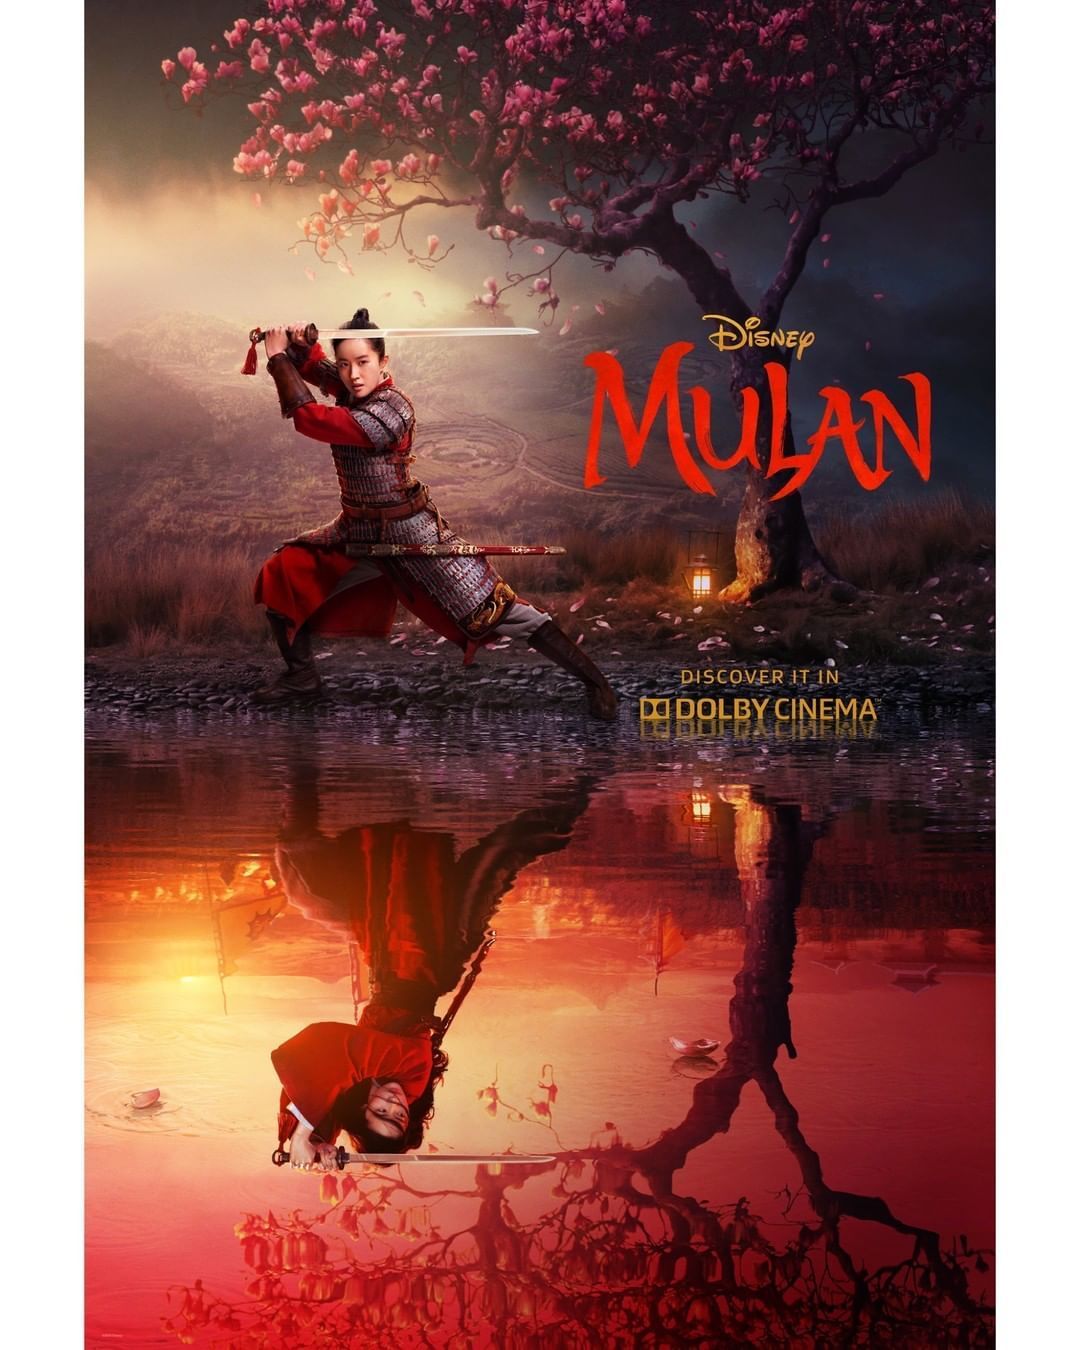 Mulan as warrior poster wallpapers